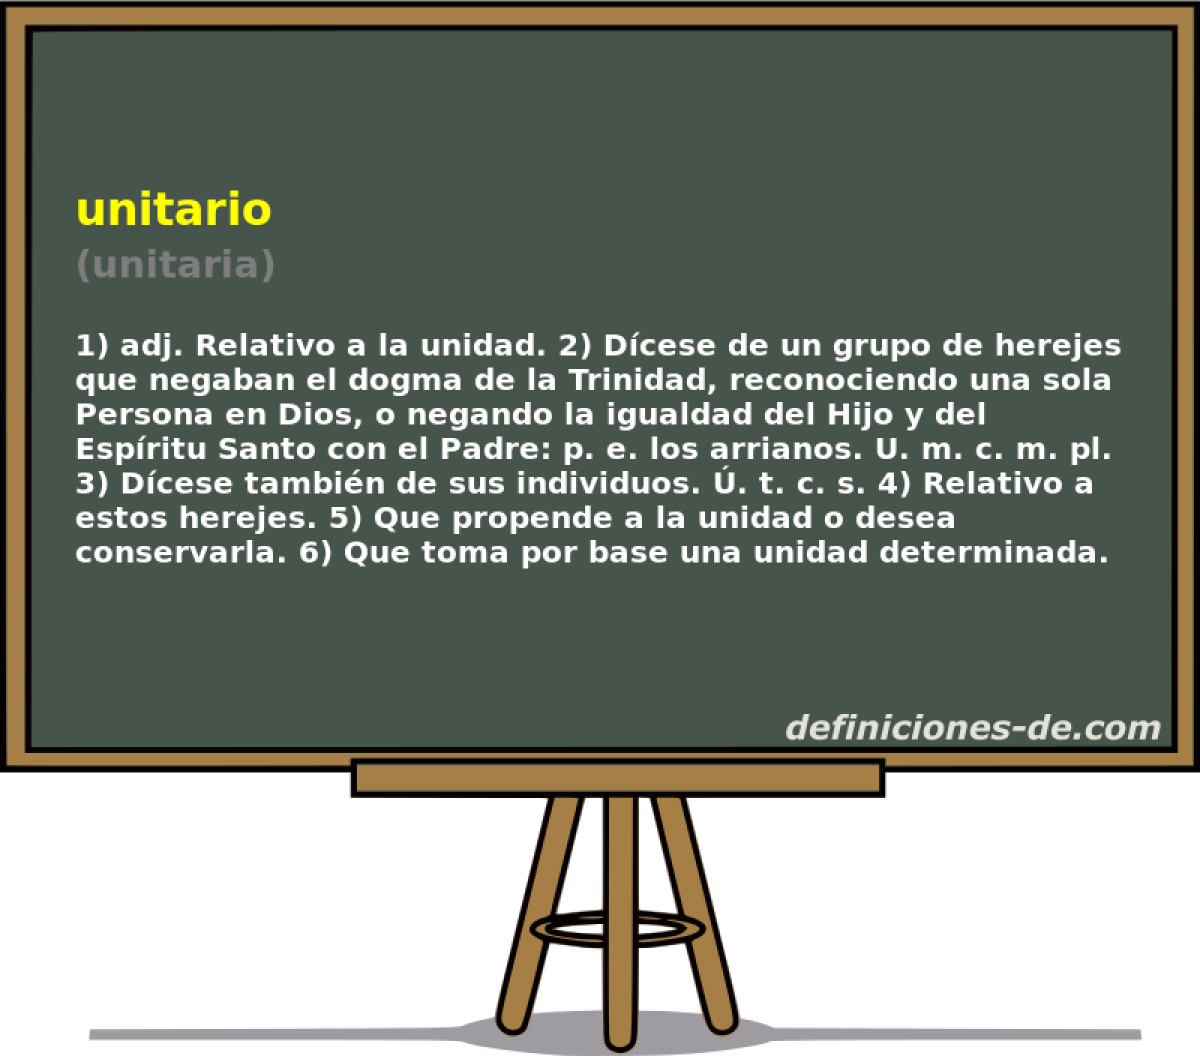 unitario (unitaria)